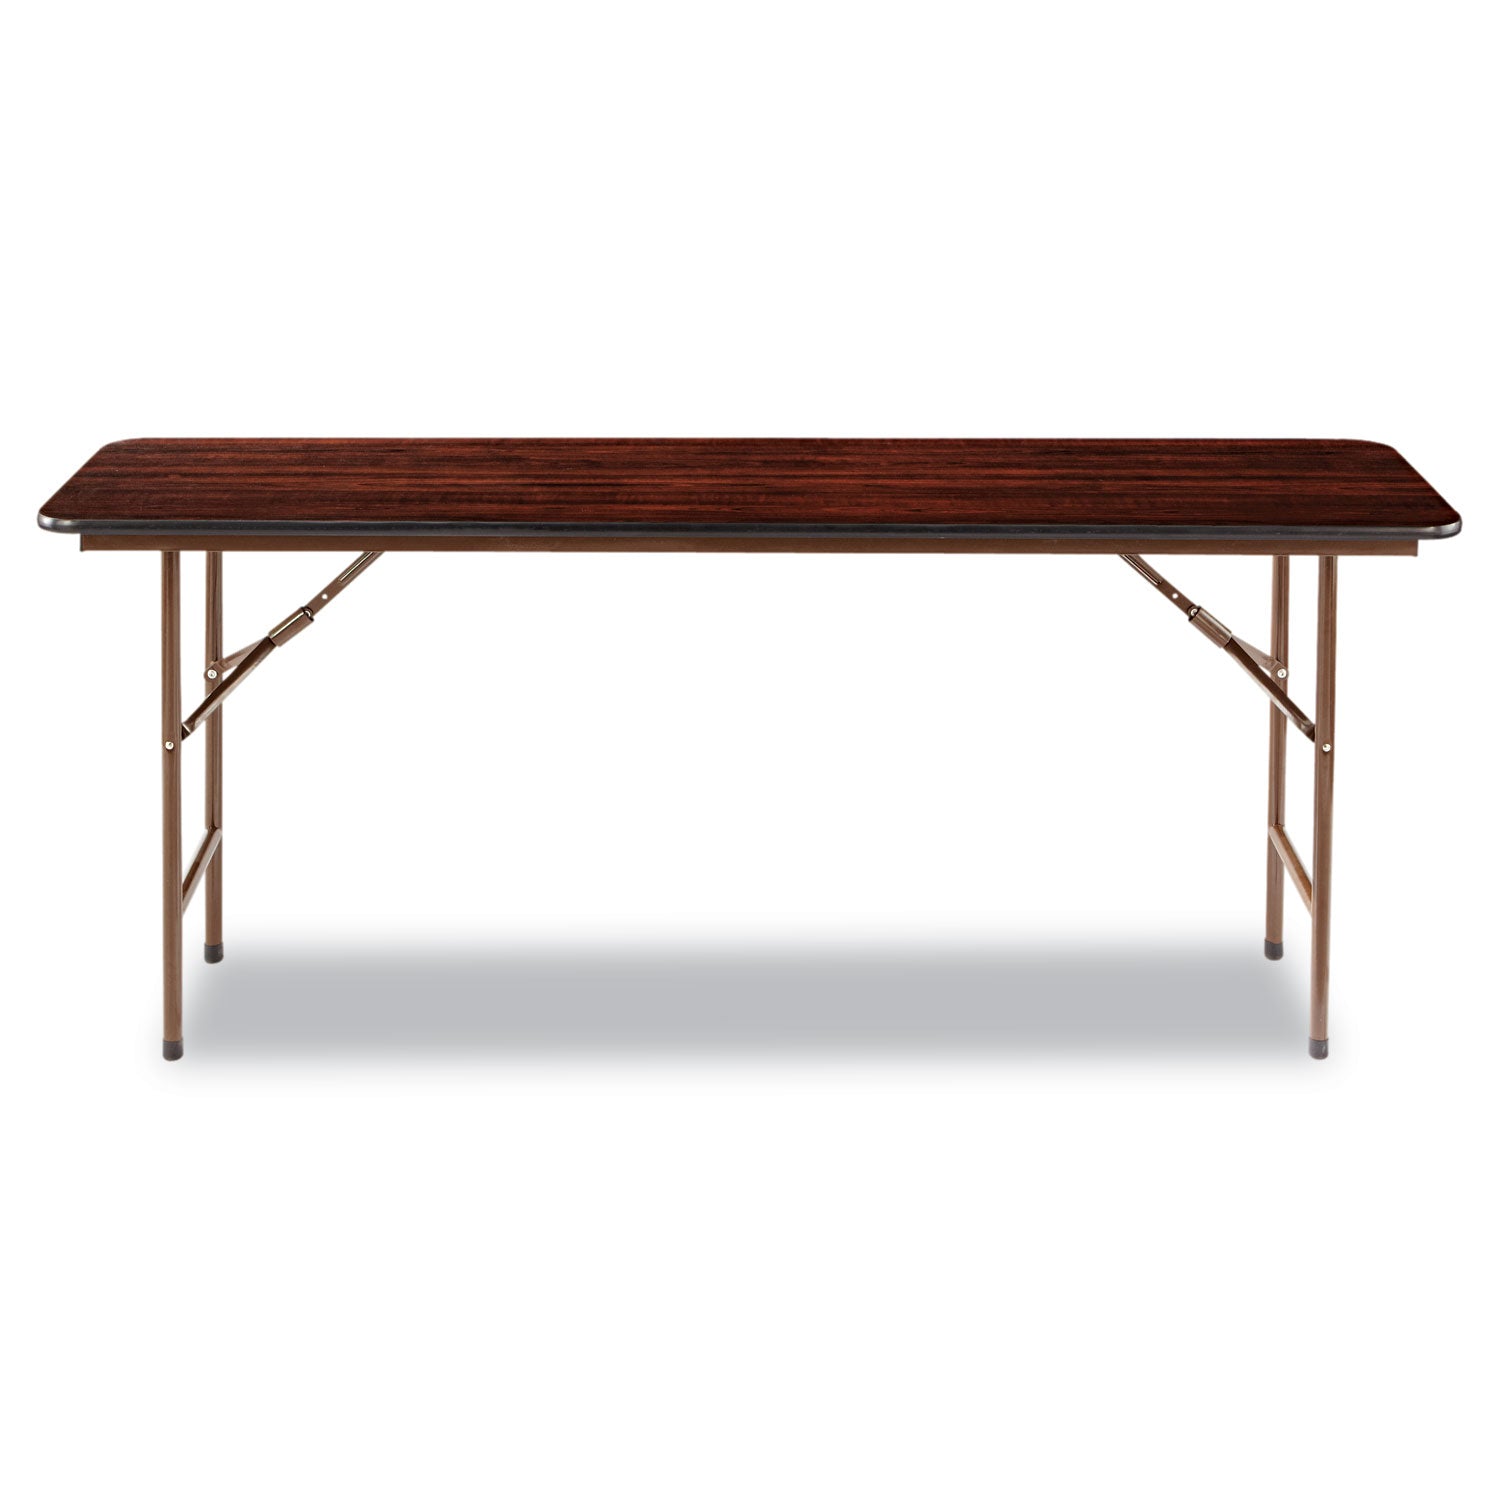 wood-folding-table-rectangular-7188w-x-1775d-x-2913h-mahogany_aleft727218my - 5